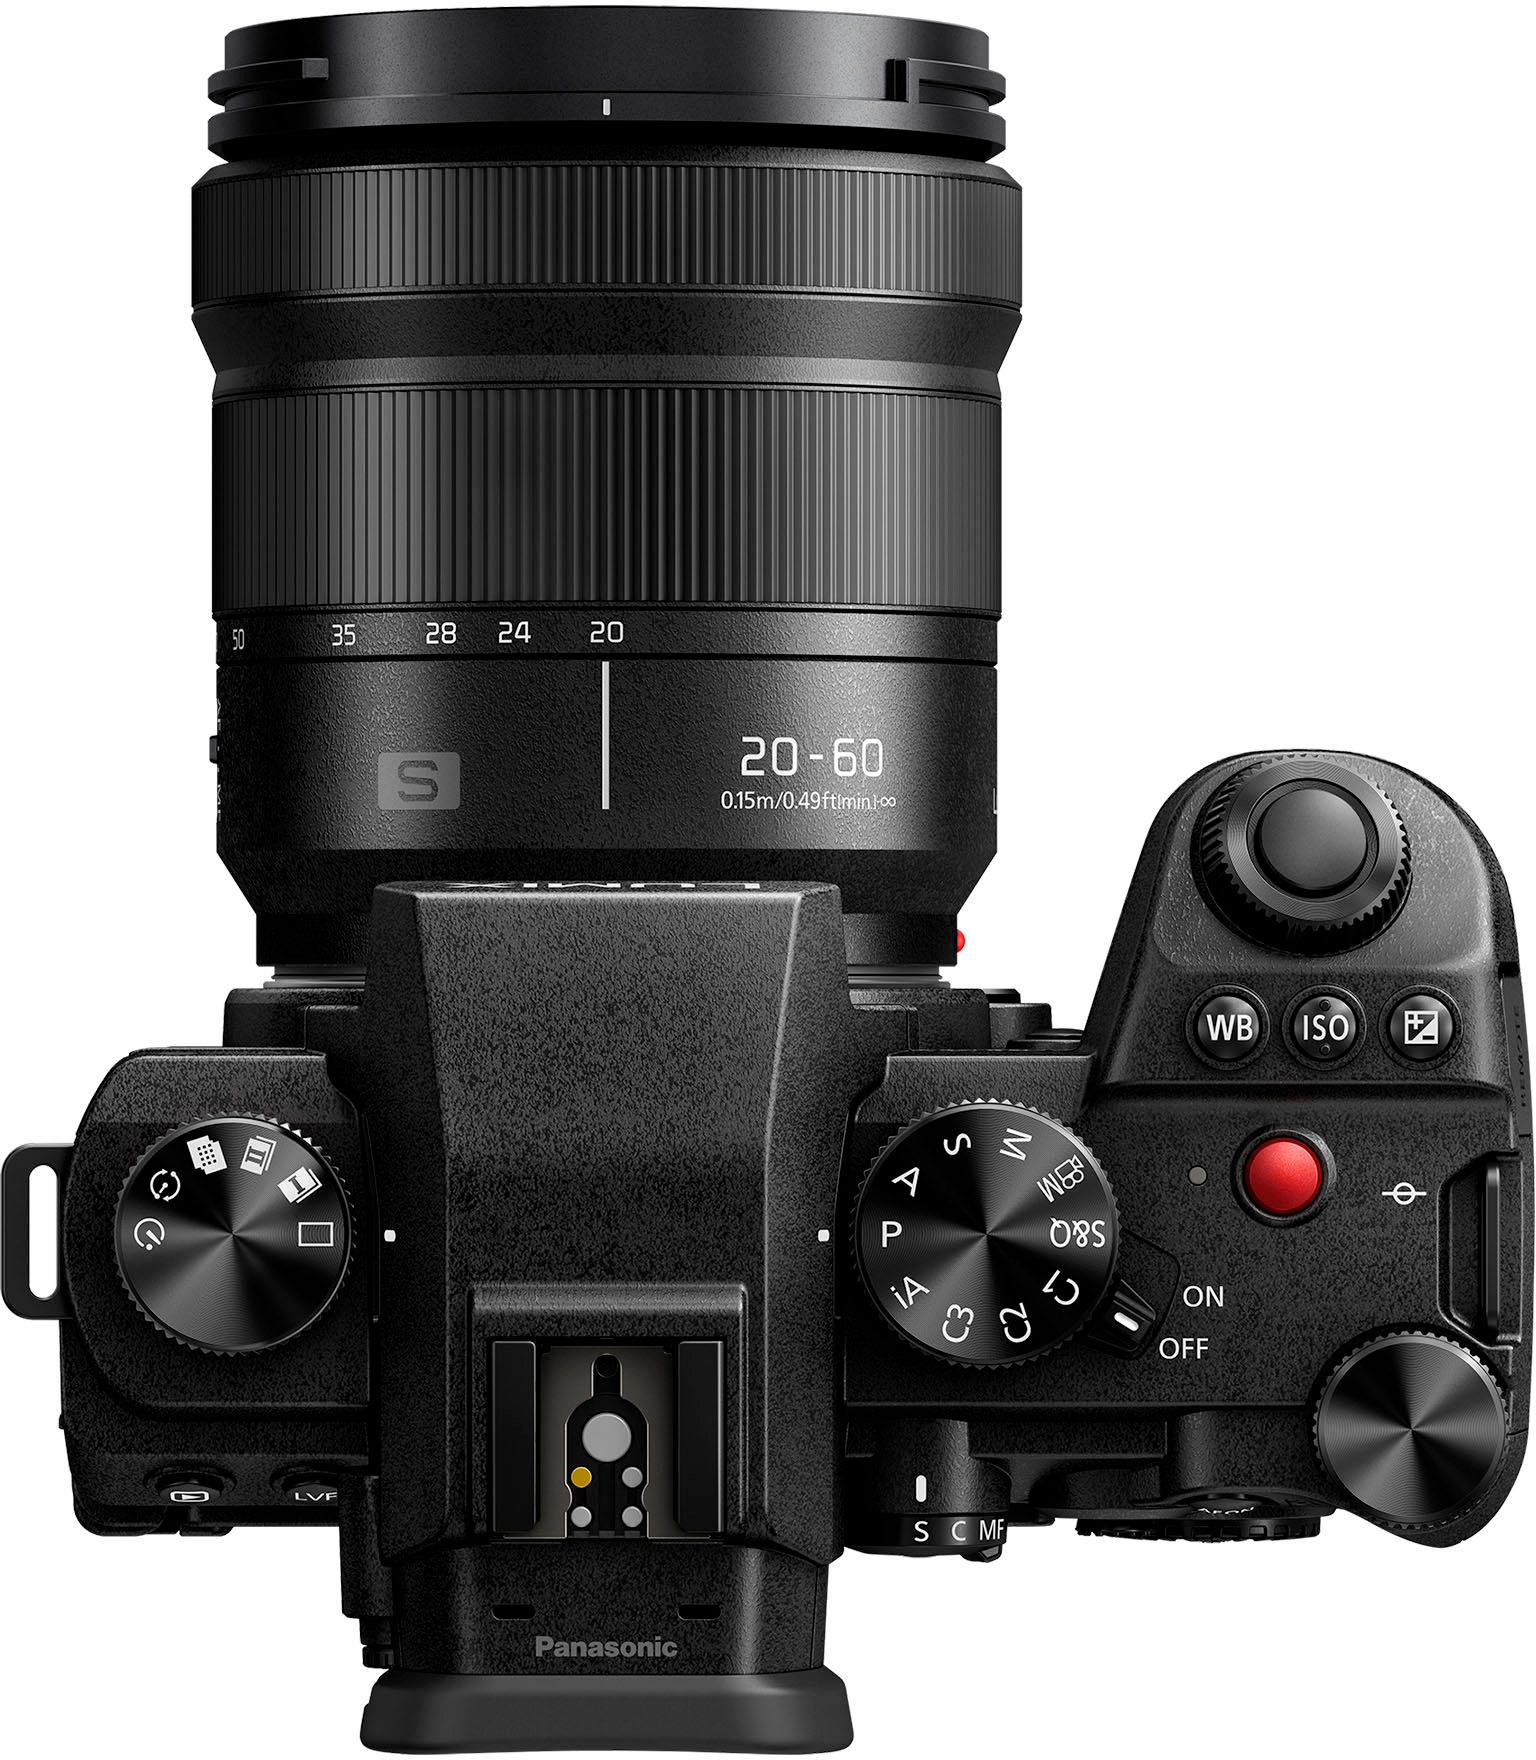 Panasonic LUMIX S5II Mirrorless Camera with 20-60mm F3.5-5.6 L